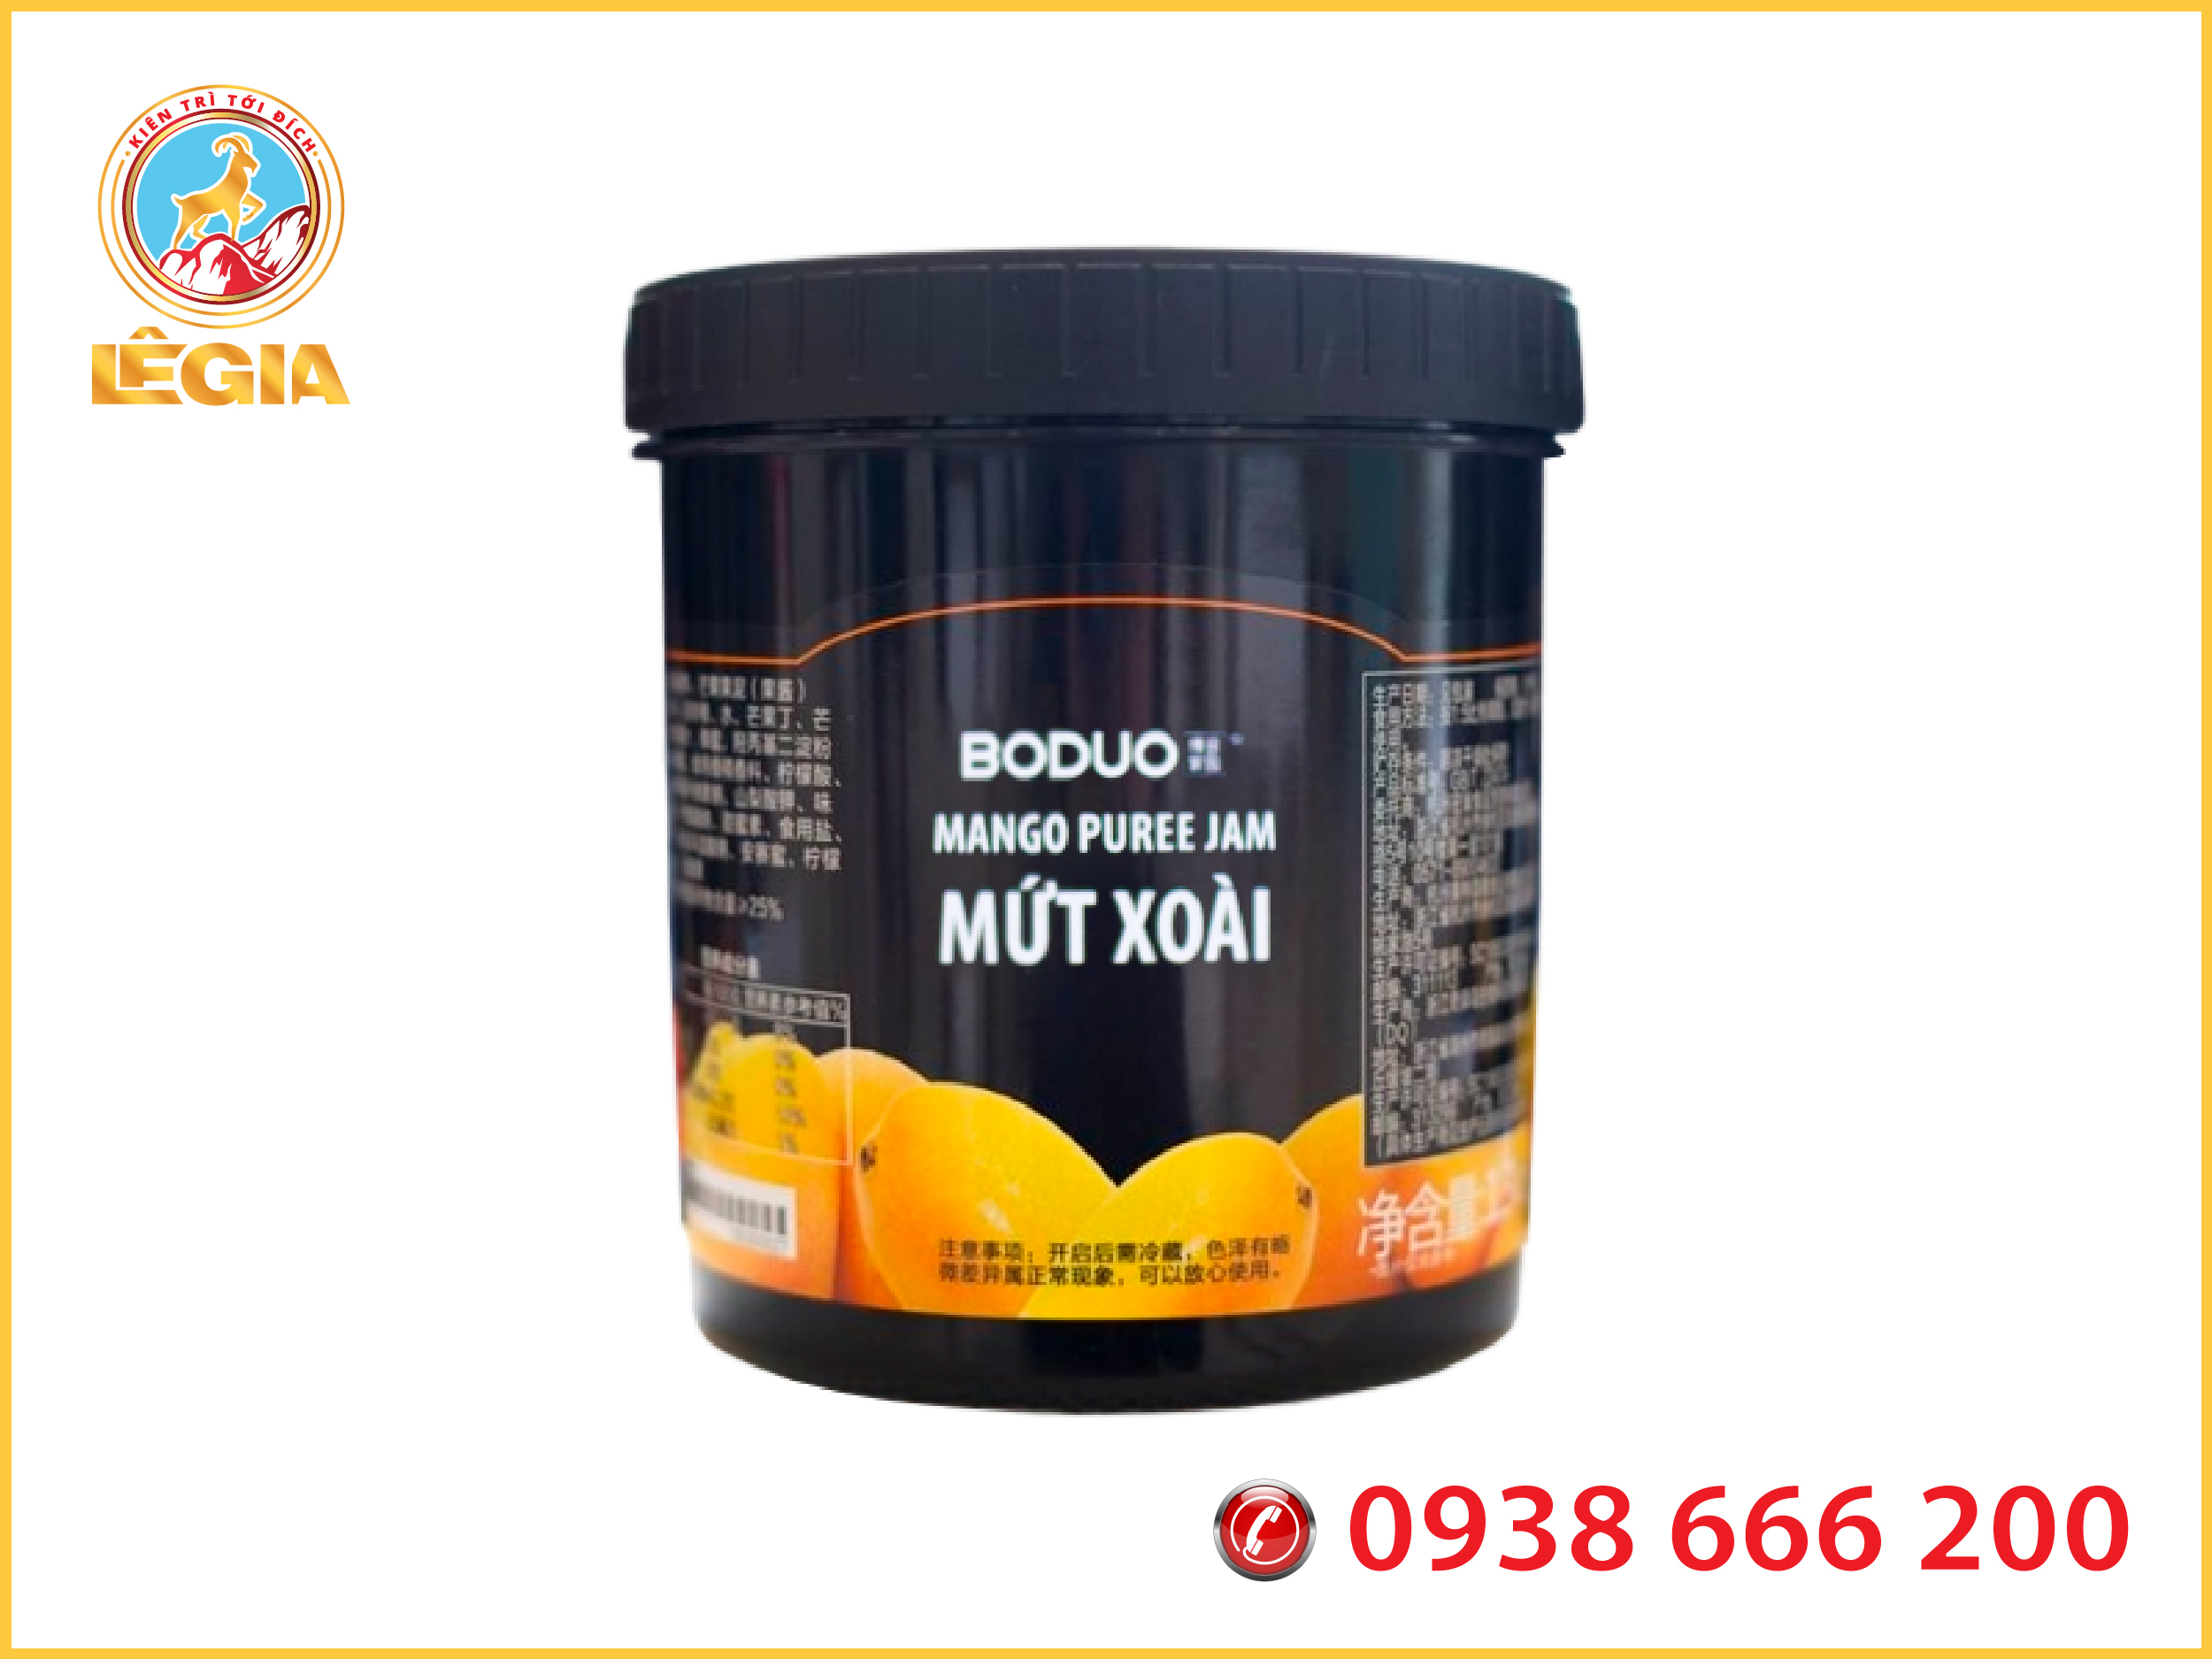 Sốt Boduo Xoài 1.3kg - Boduo Mango Puree Jam